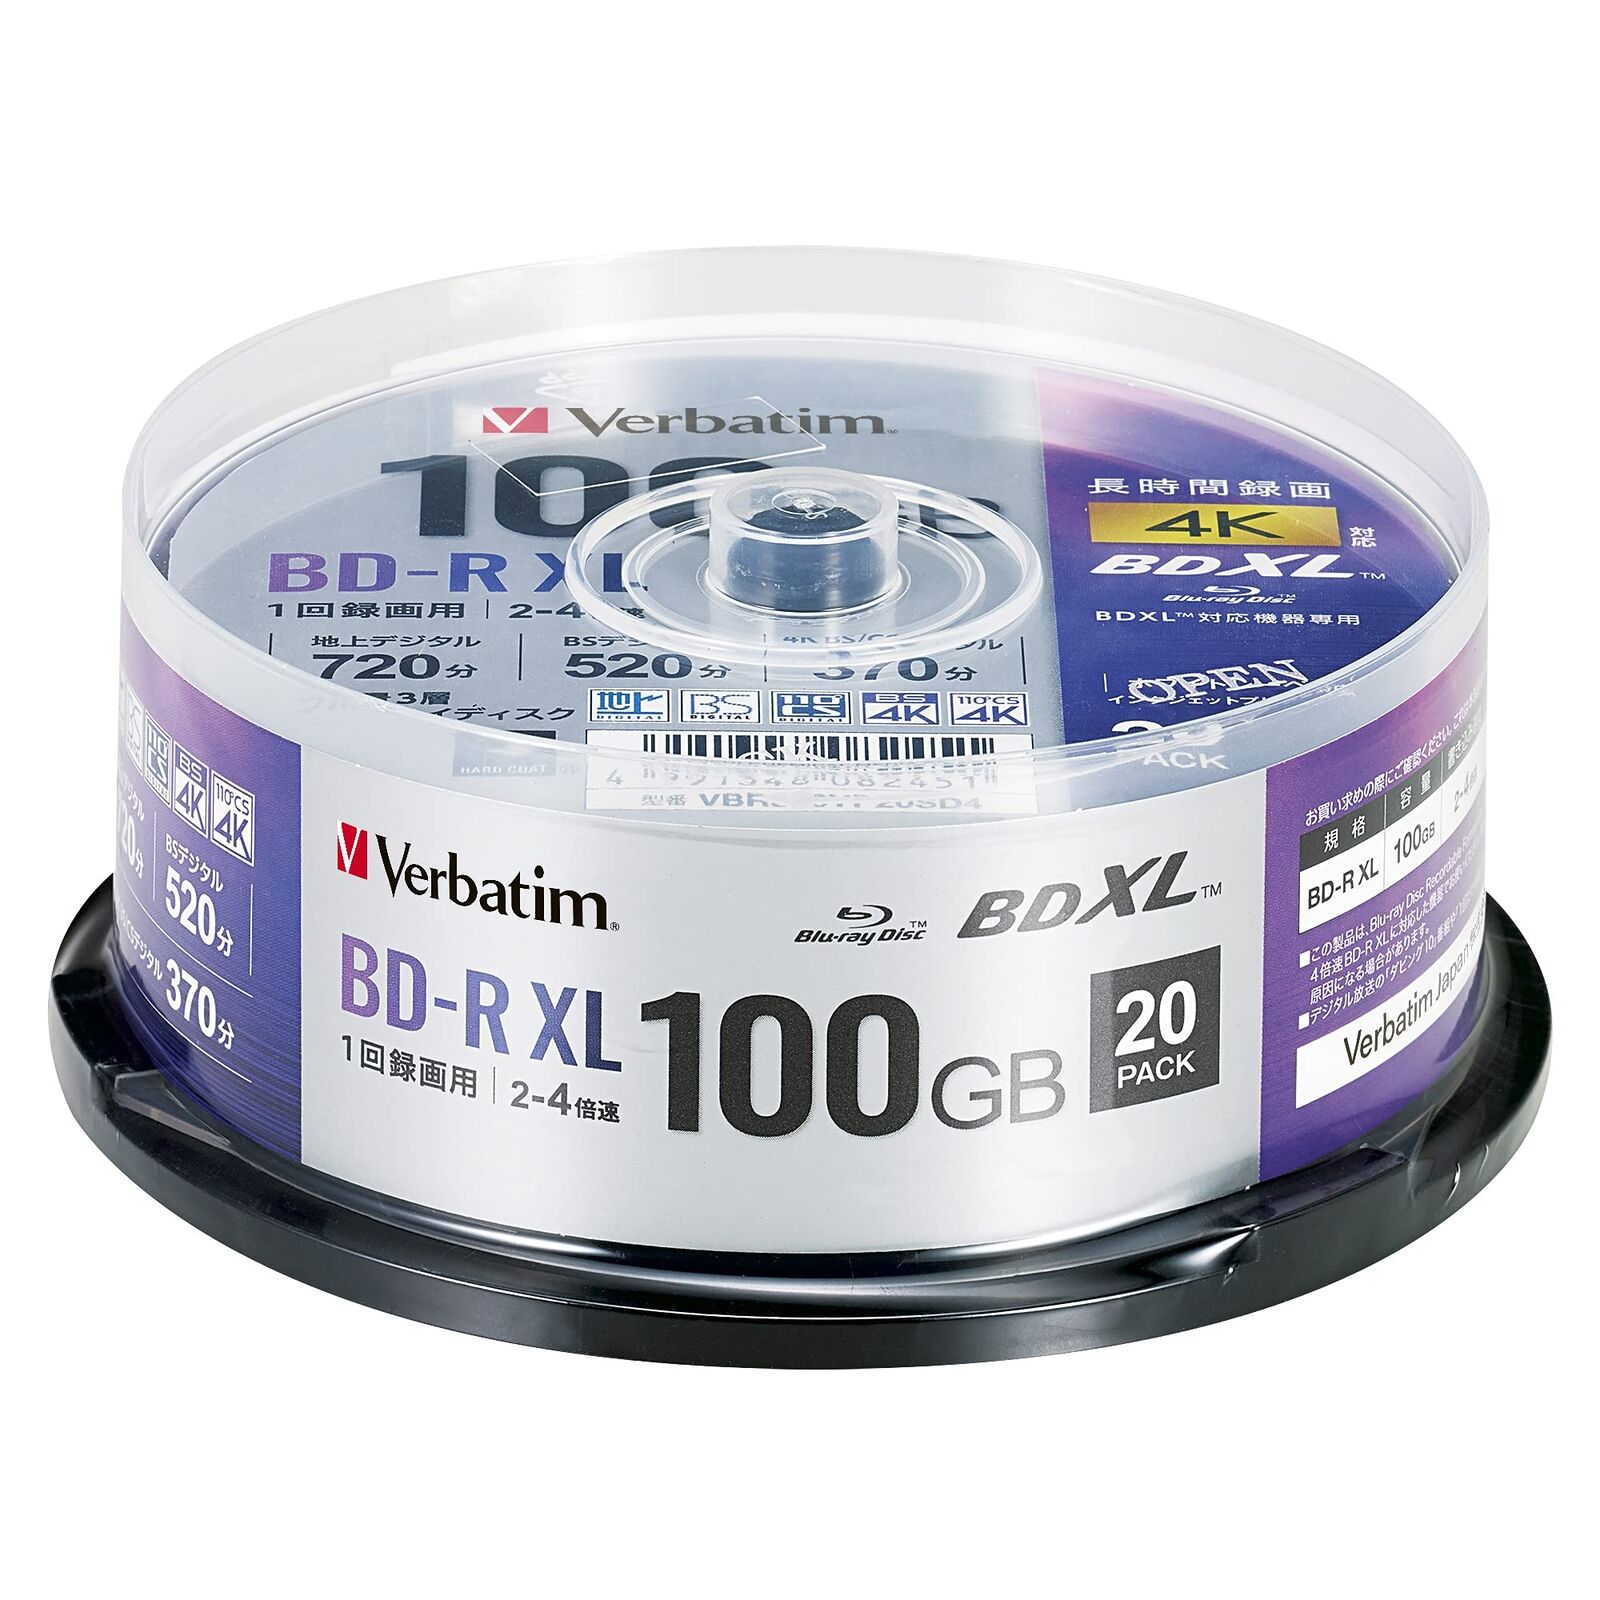 Verbatim 1 time Recording Blu-ray Disc BD-R XL 100GB 20pcs White VBR520YP20SD4